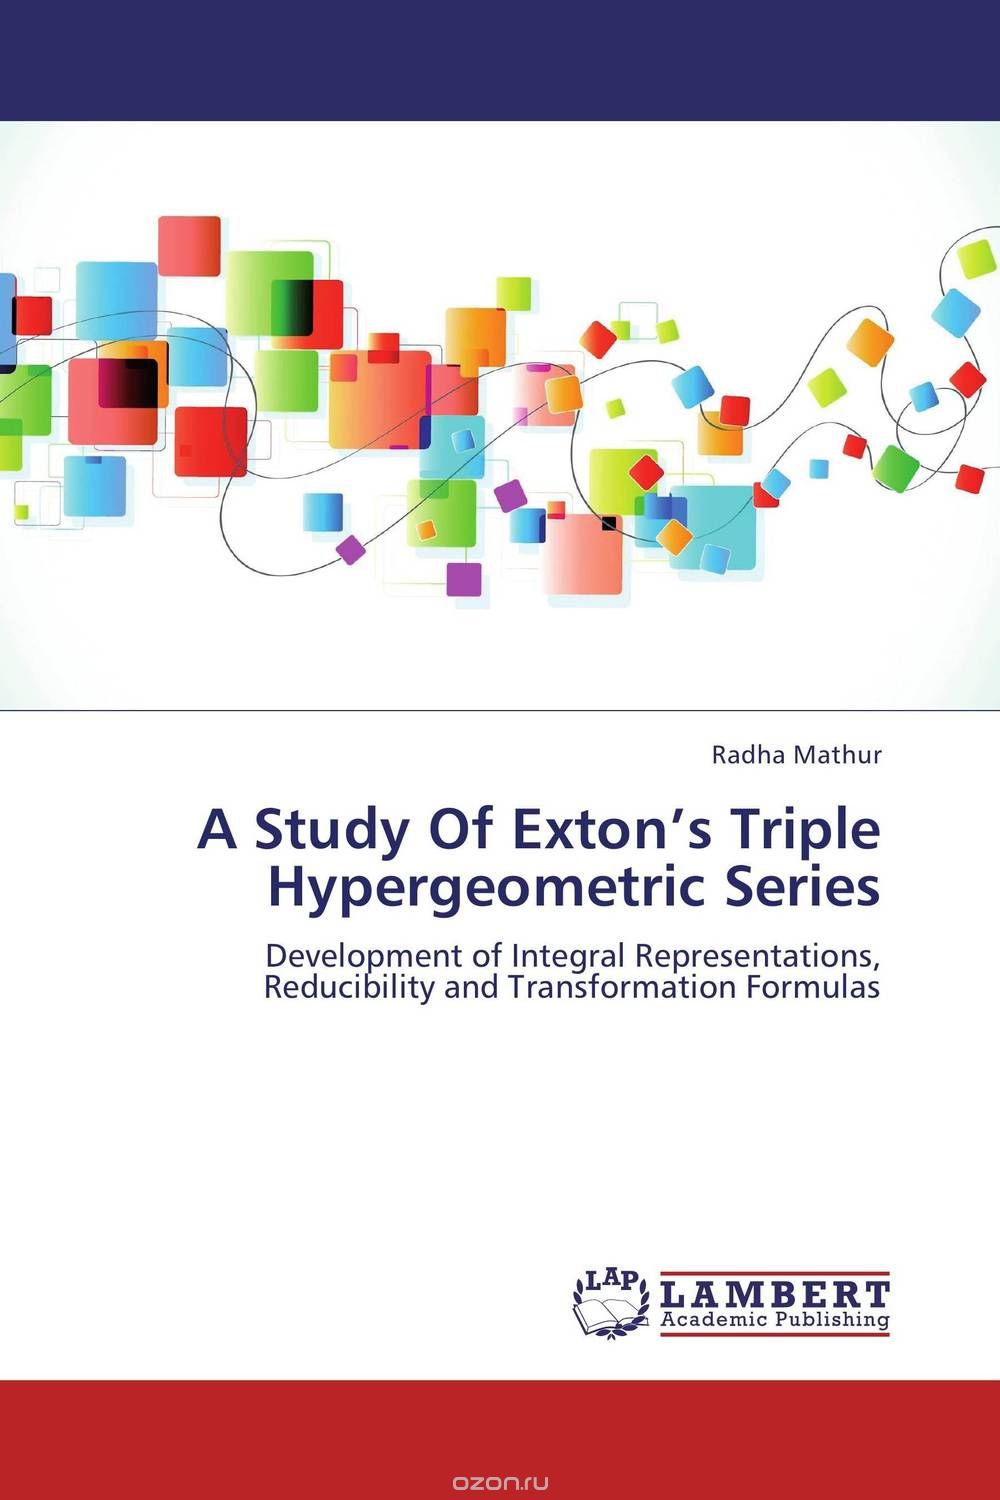 Скачать книгу "A Study Of Exton’s Triple Hypergeometric Series"